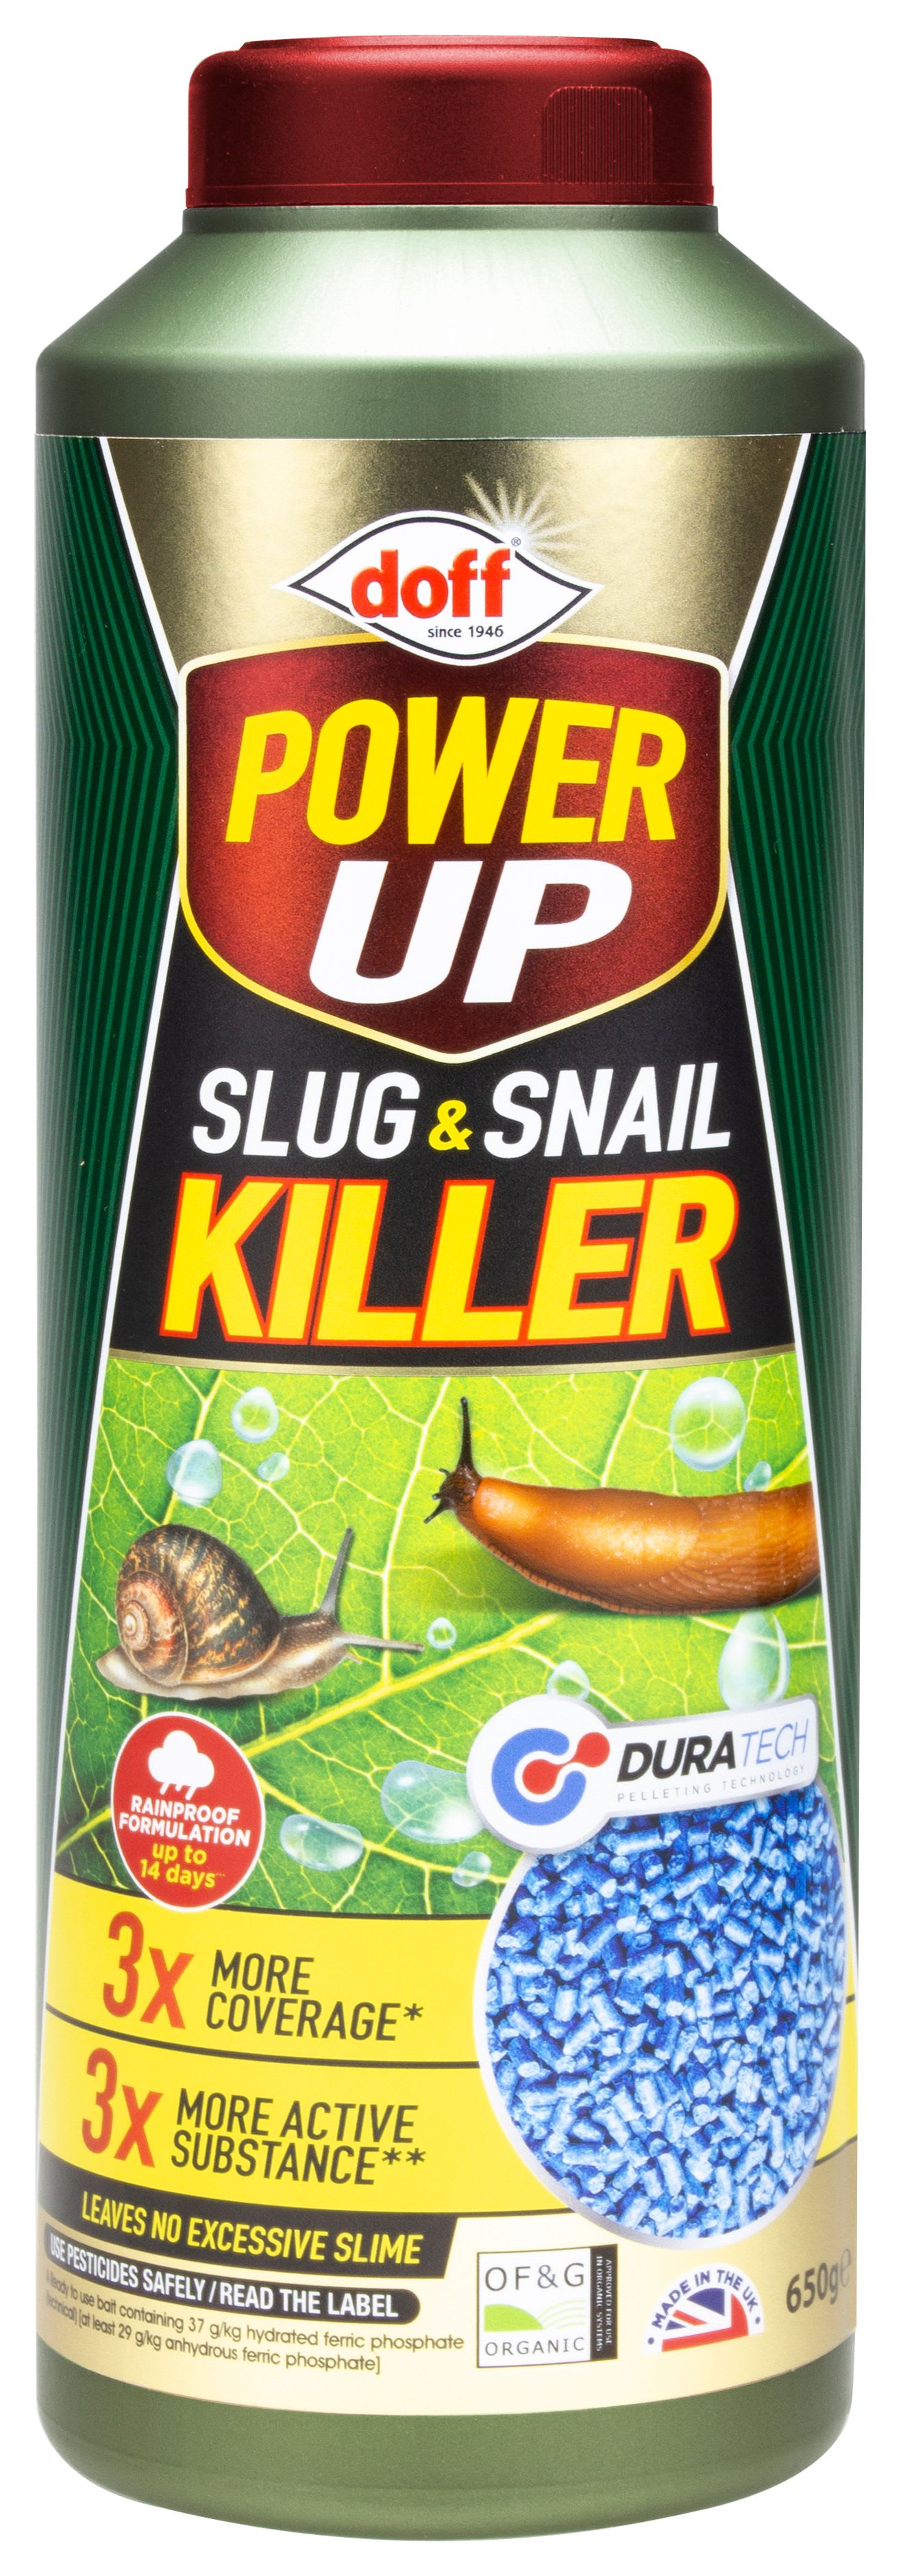 Doff Power Up Slug & Snail Killer -